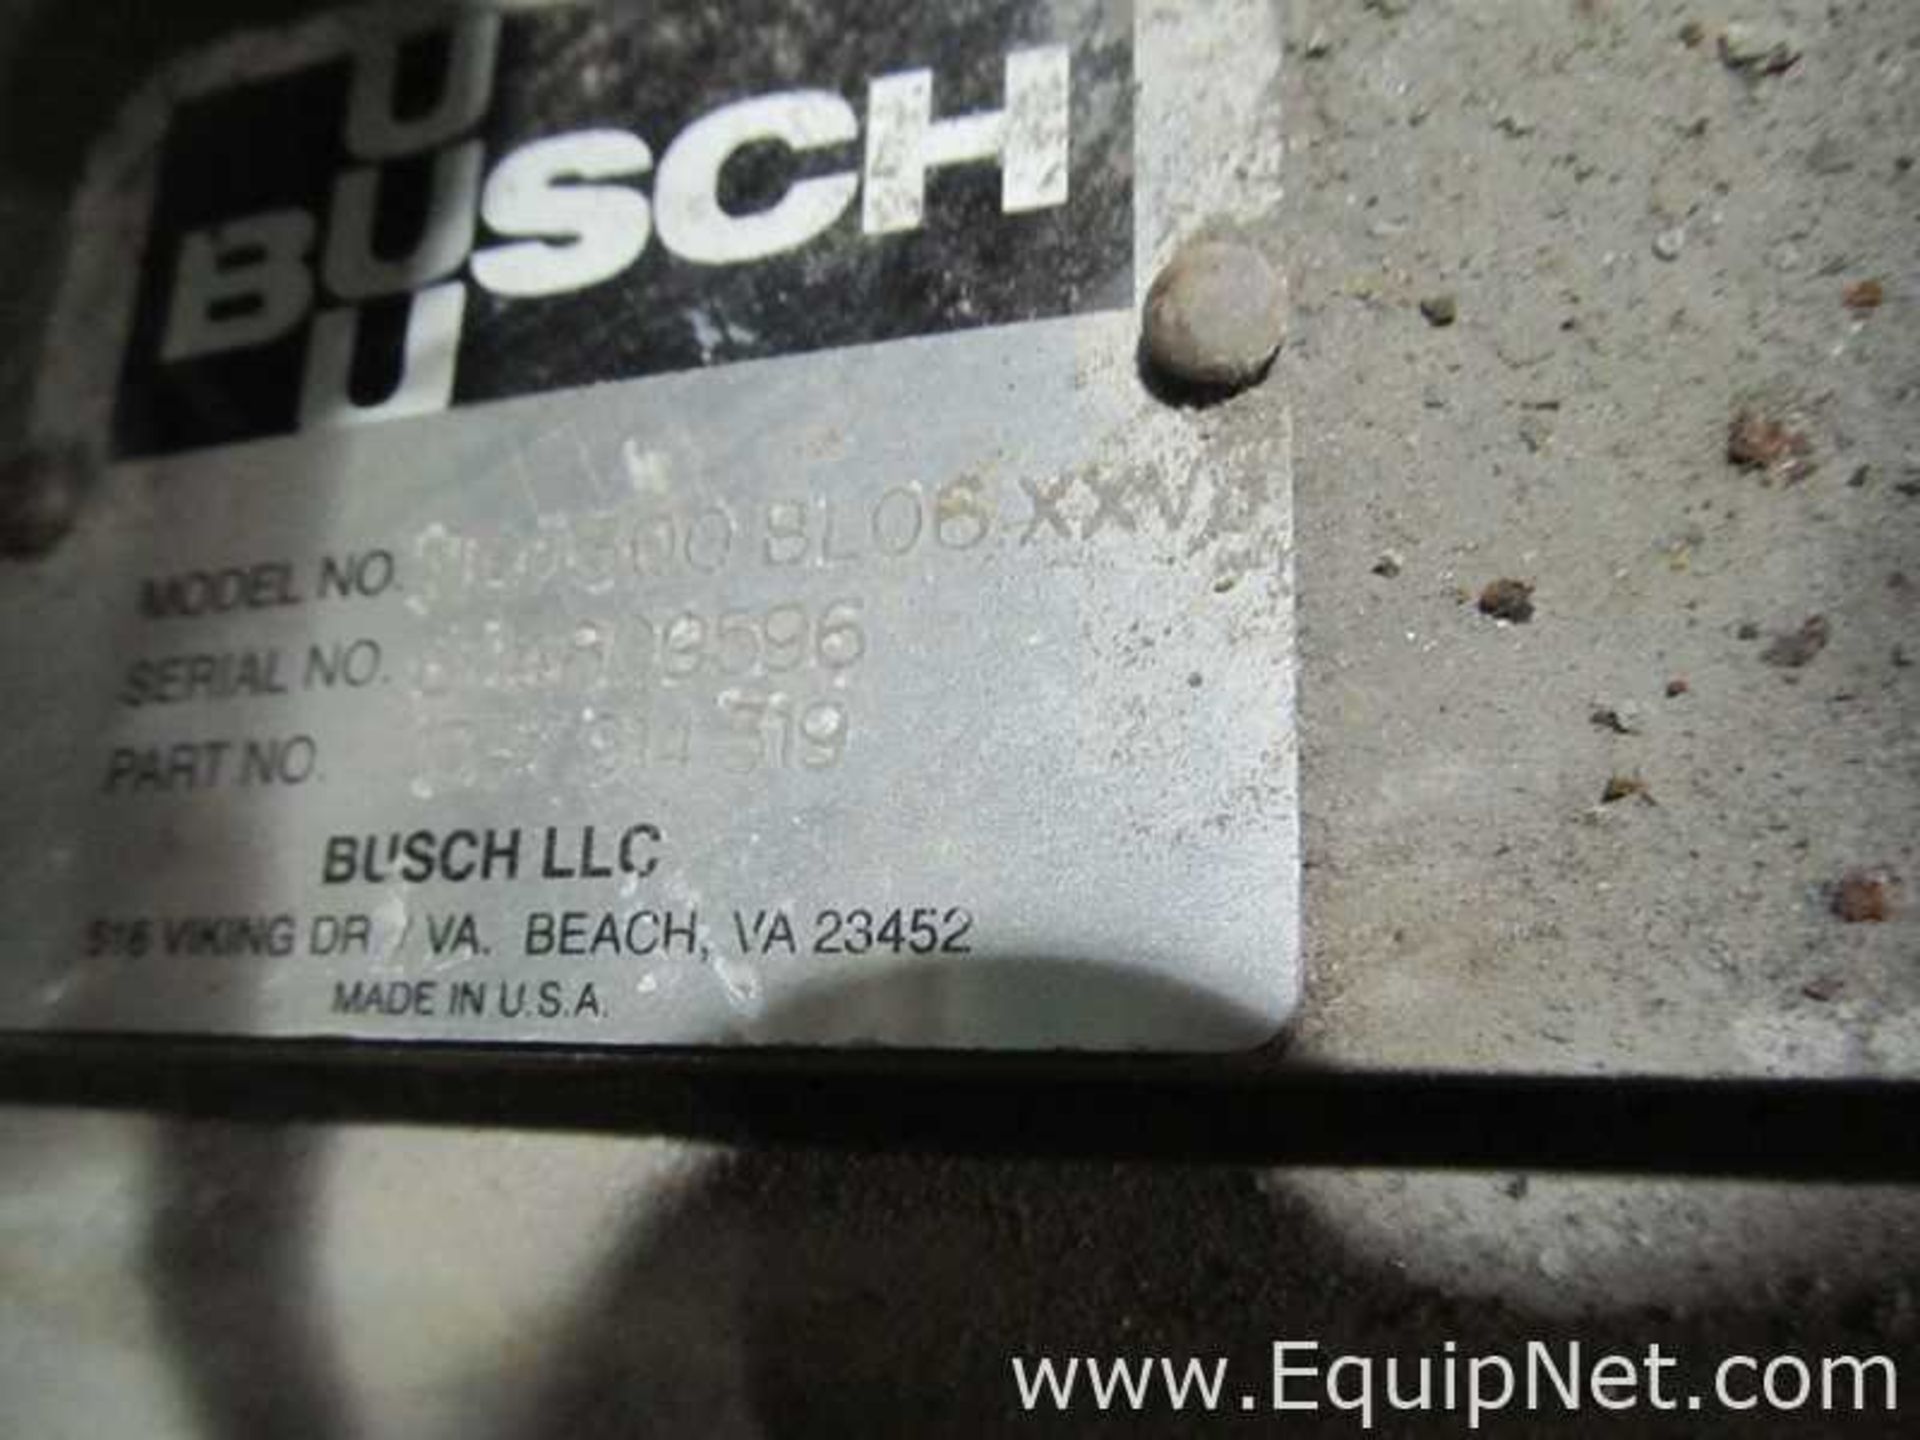 Busch NC 0300 B L06 XXVJ Vacuum Pump Skid - Image 3 of 4